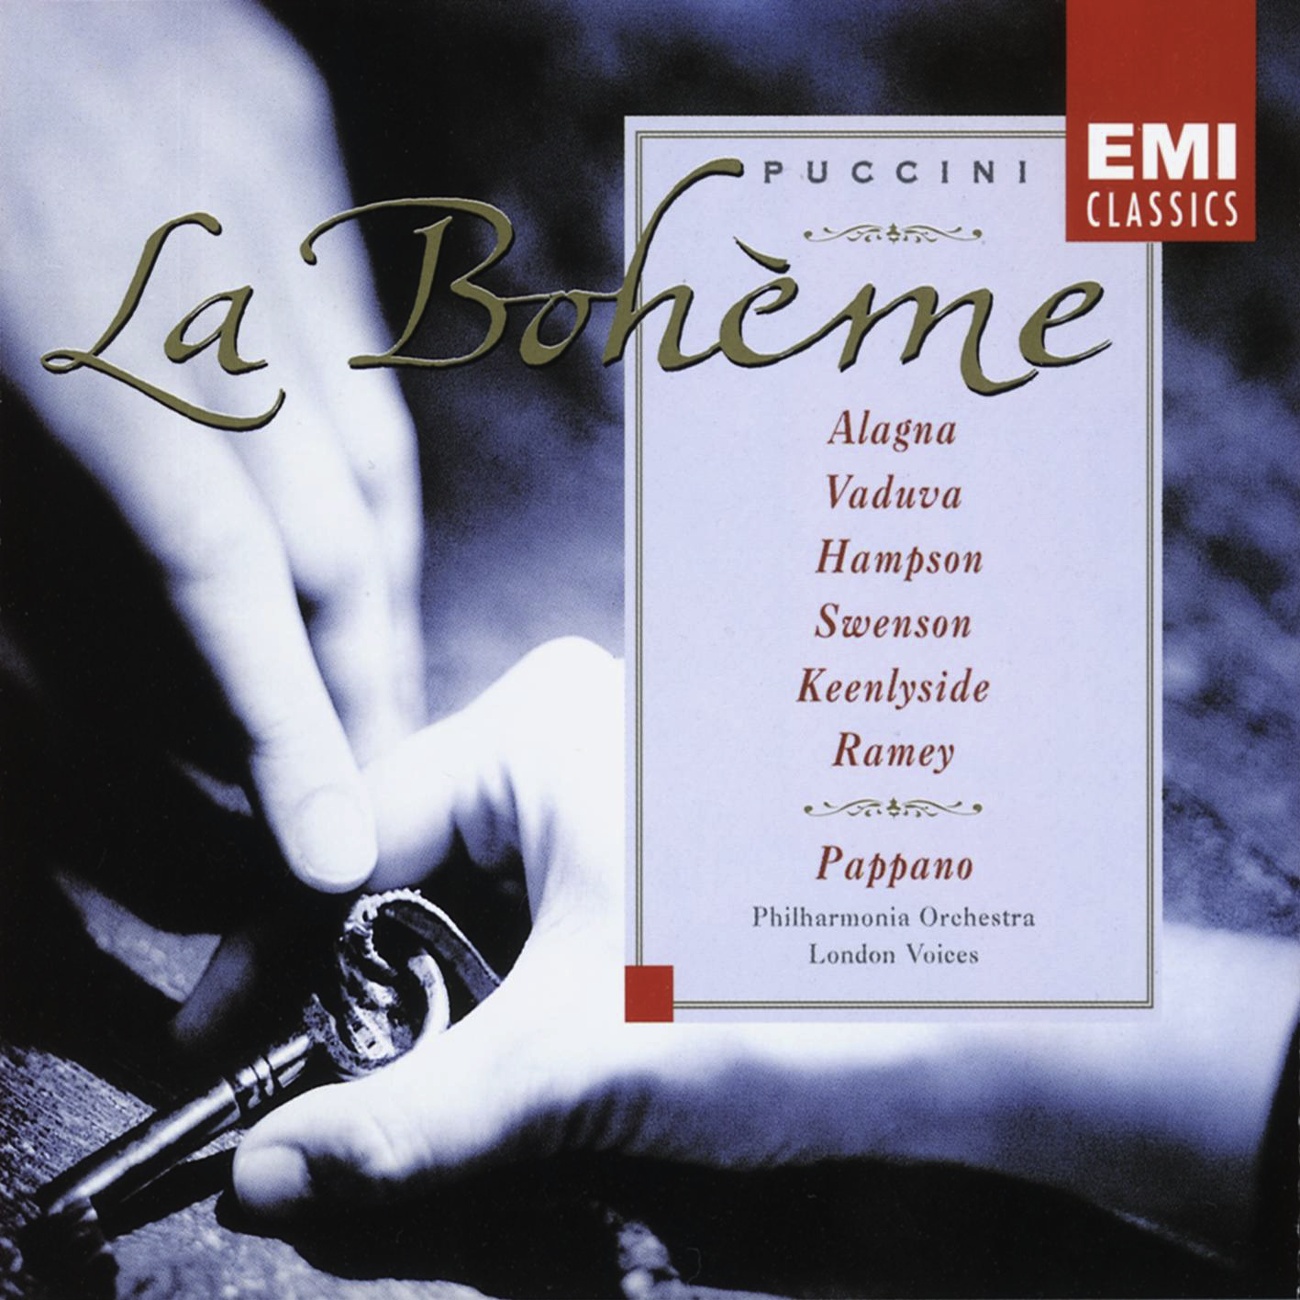 La Bohème, Act I: Si poù? Chi è là? (Benoît/Marcello/Schaunard/Colline/Rodolfo)